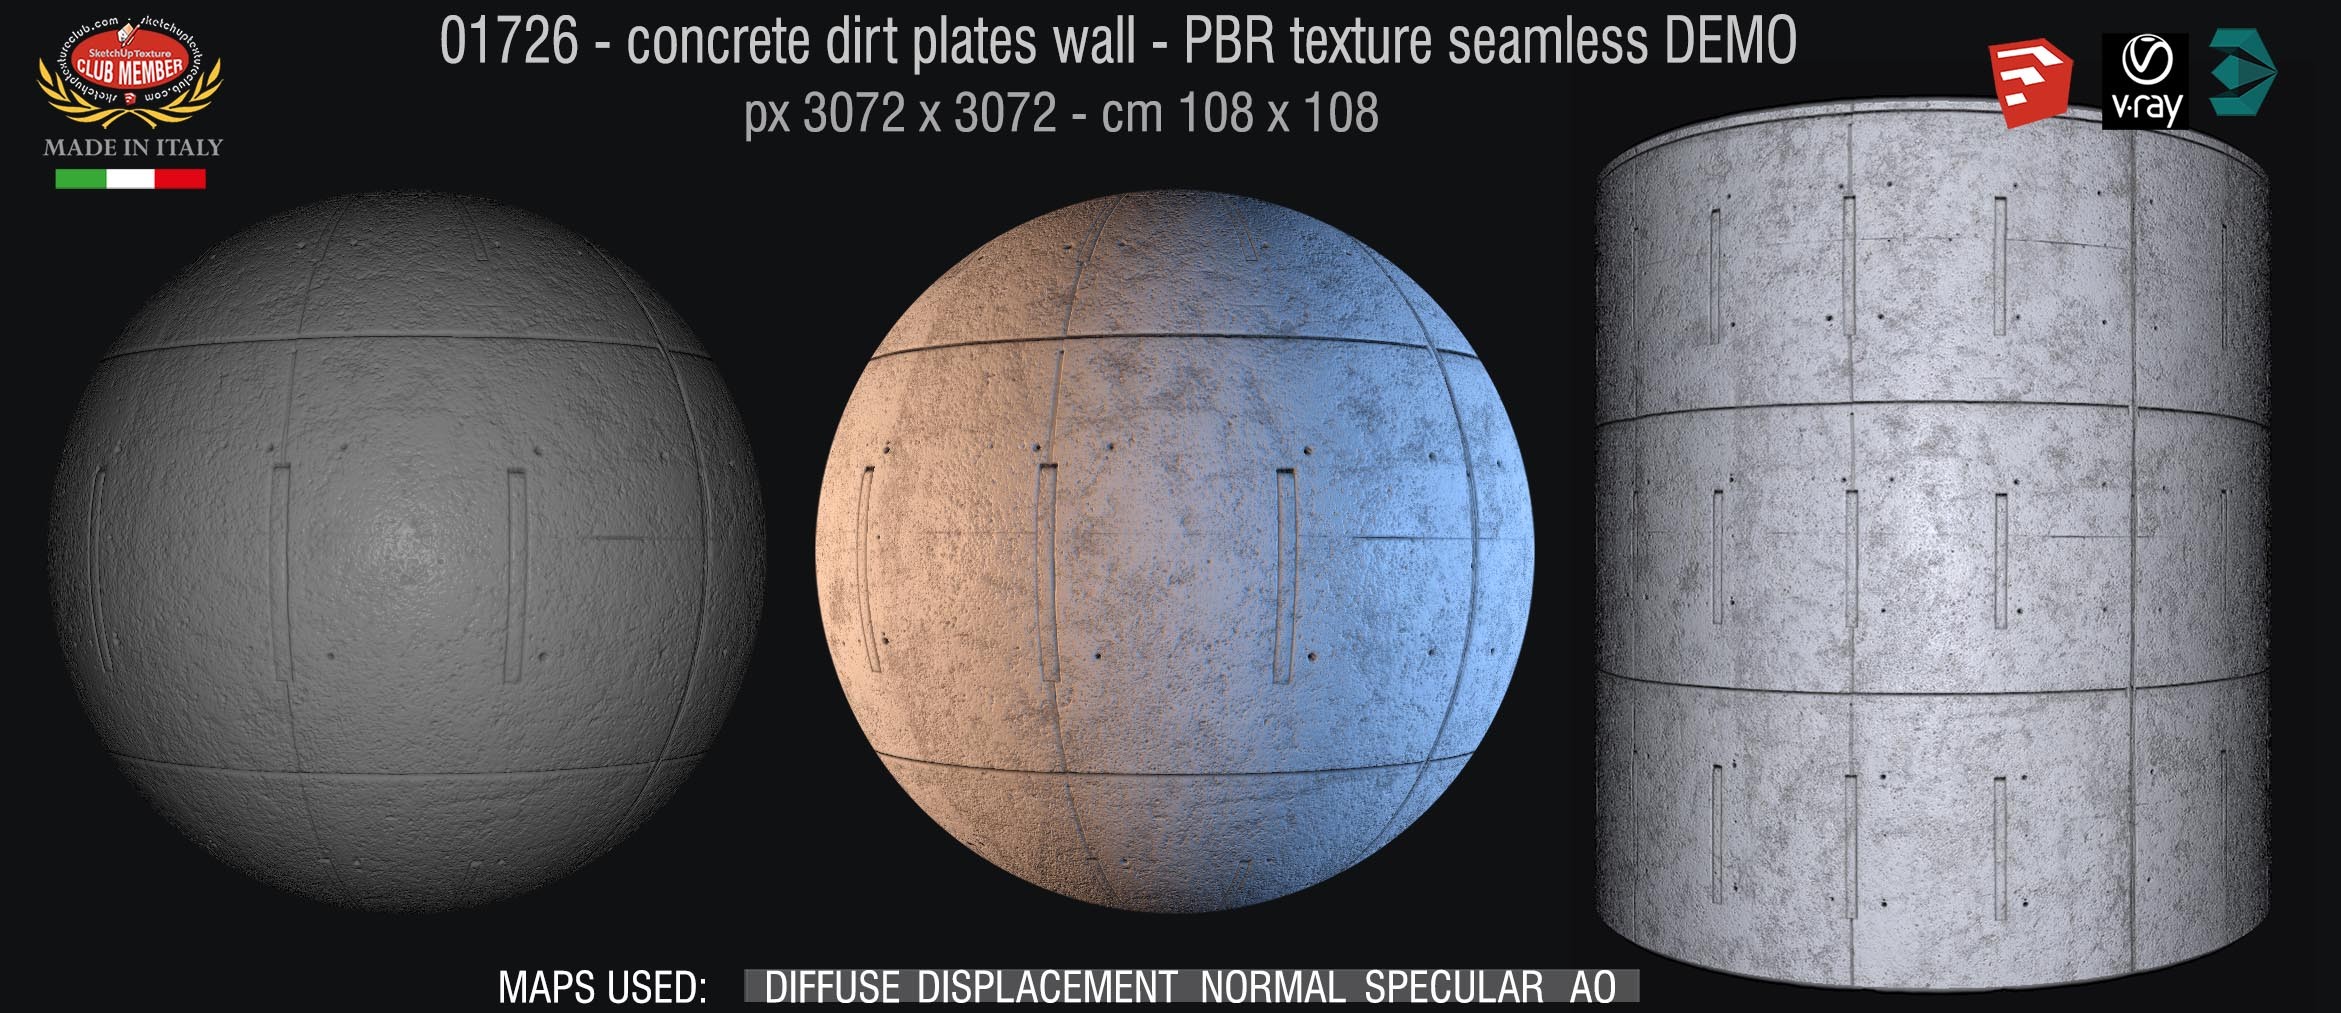 01726 concrete dirt plates wall PBR texture seamless DEMO